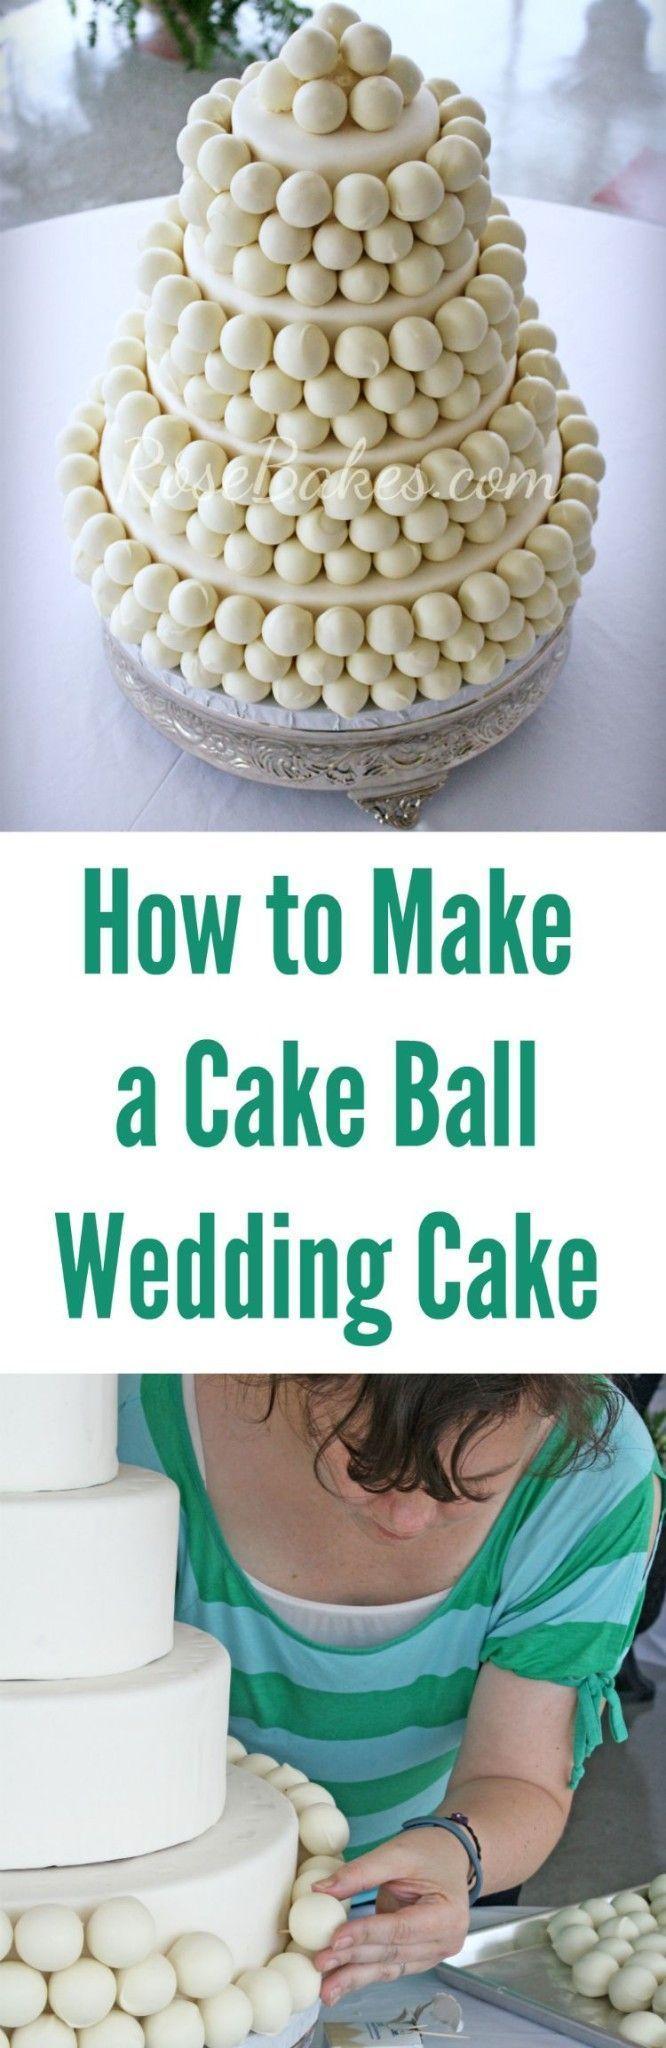 Wedding - How To Make A Cake Ball Wedding Cake